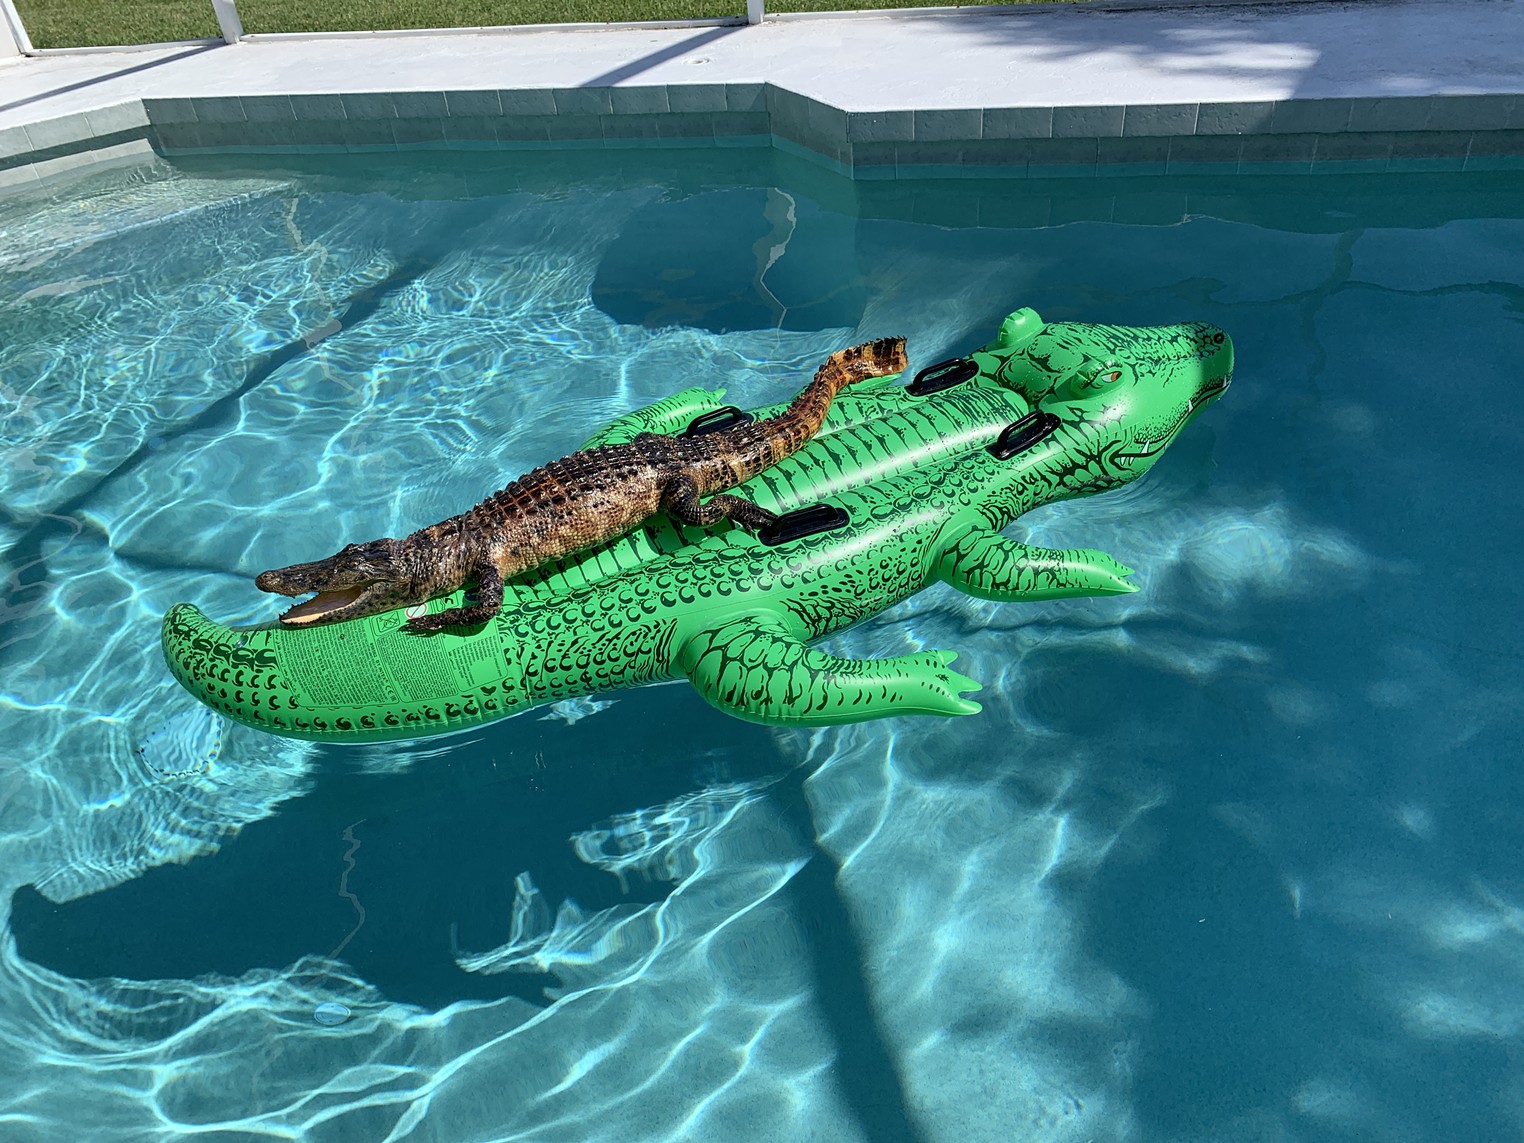 https://media2.miaminewtimes.com/mia/imager/u/slideshow/11177606/alligator_pool_float.jpeg